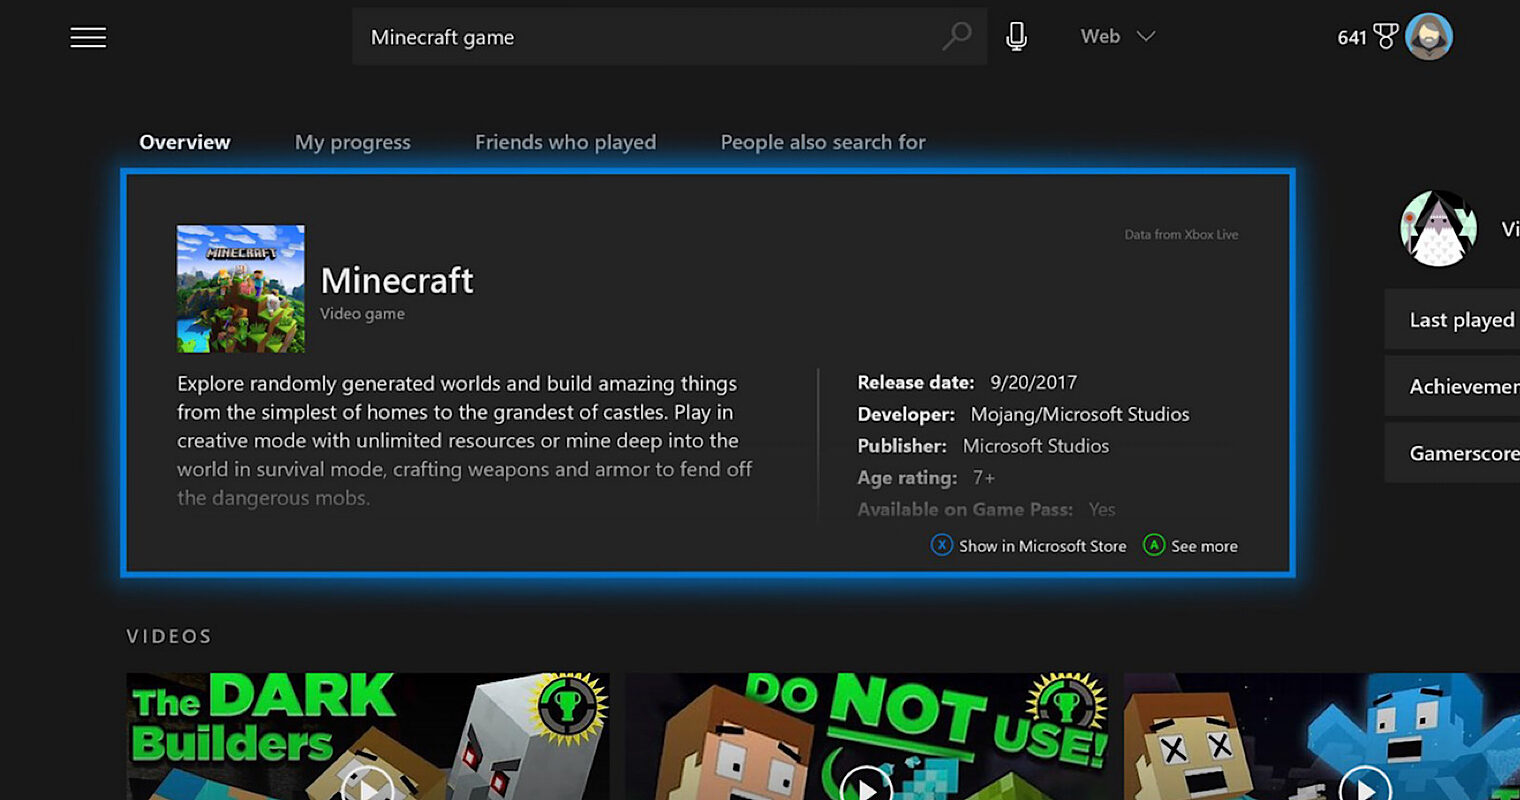 Microsoft Bing is Launching an Xbox App